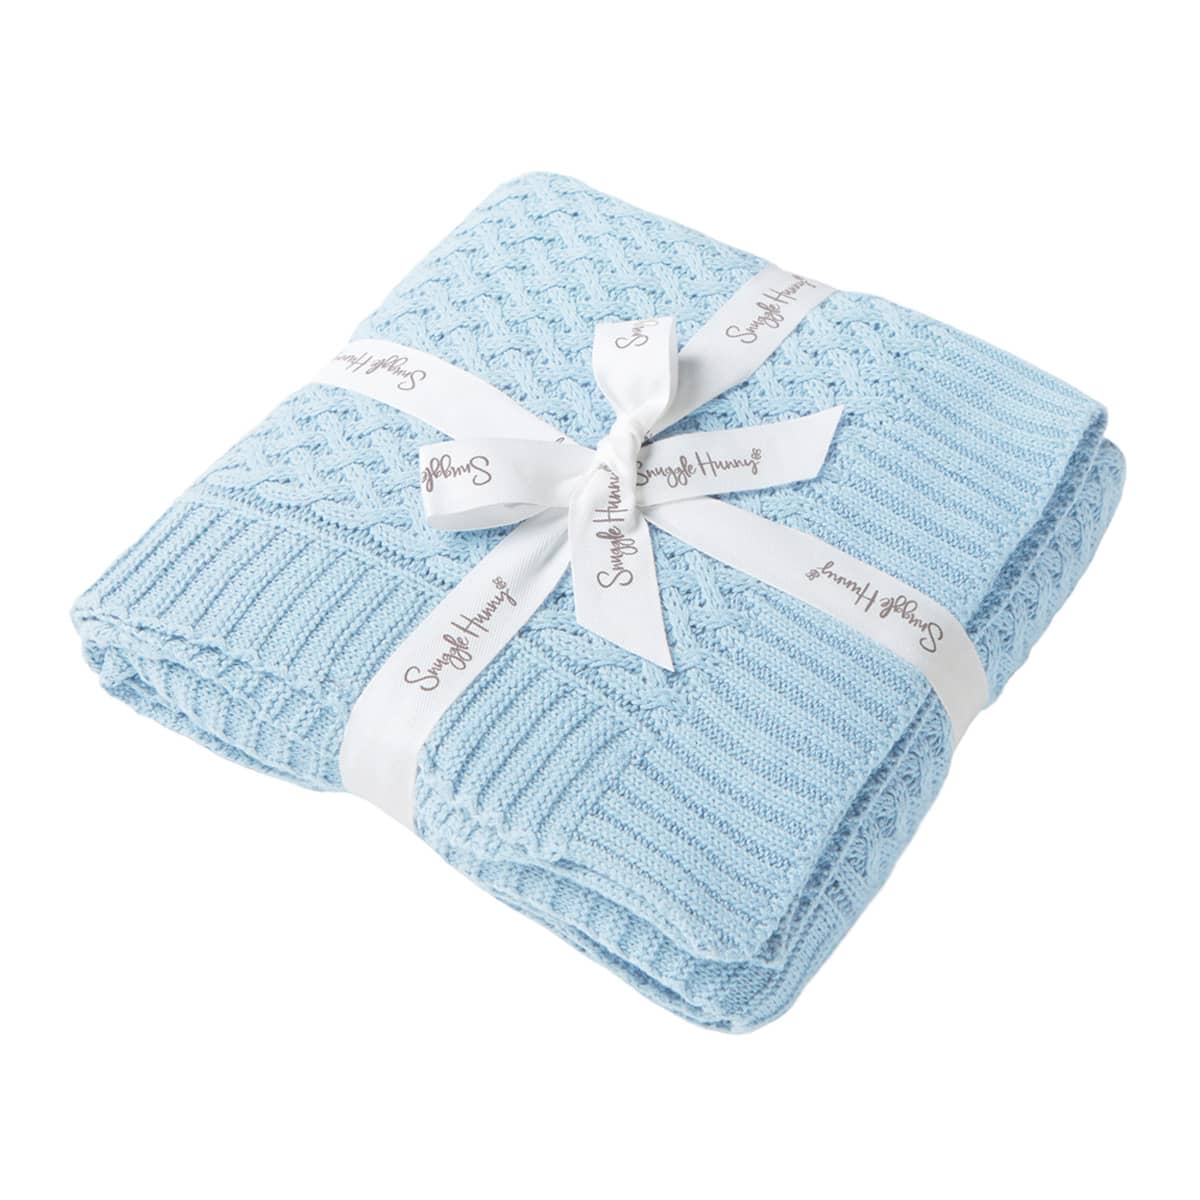 Snuggle Hunny Diamond Knit Baby Blanket - Baby Blue